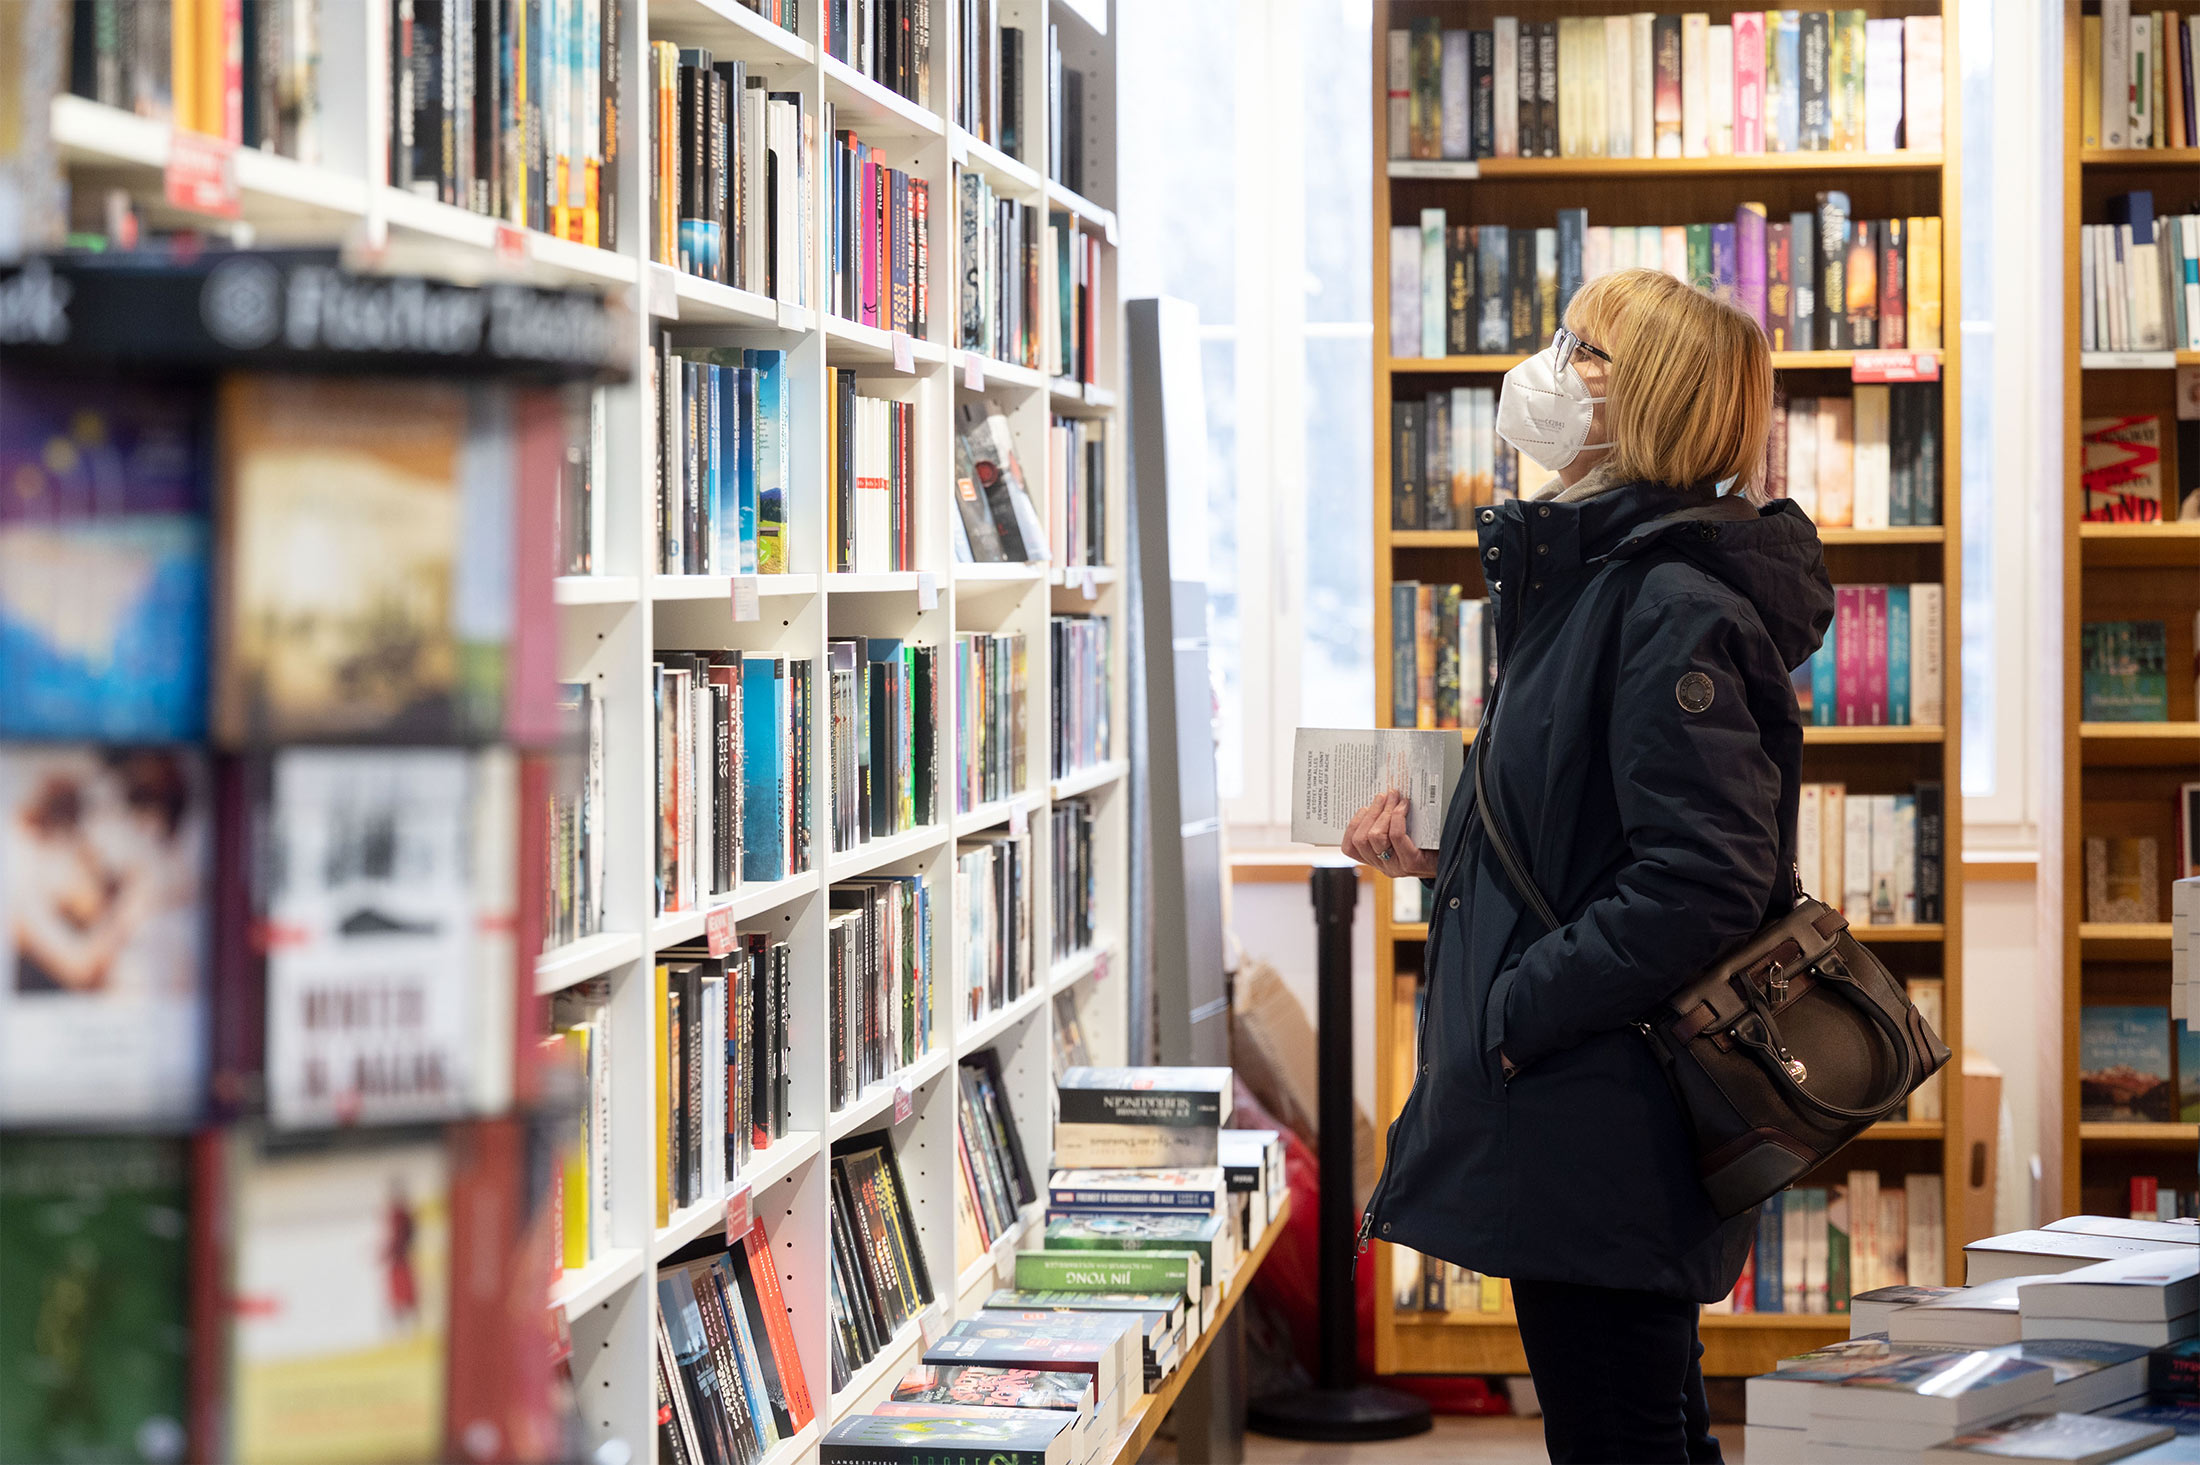 Colleen Hoover, Viral BookTok Sensation Lead 2022 Romance Book Boom -  Bloomberg